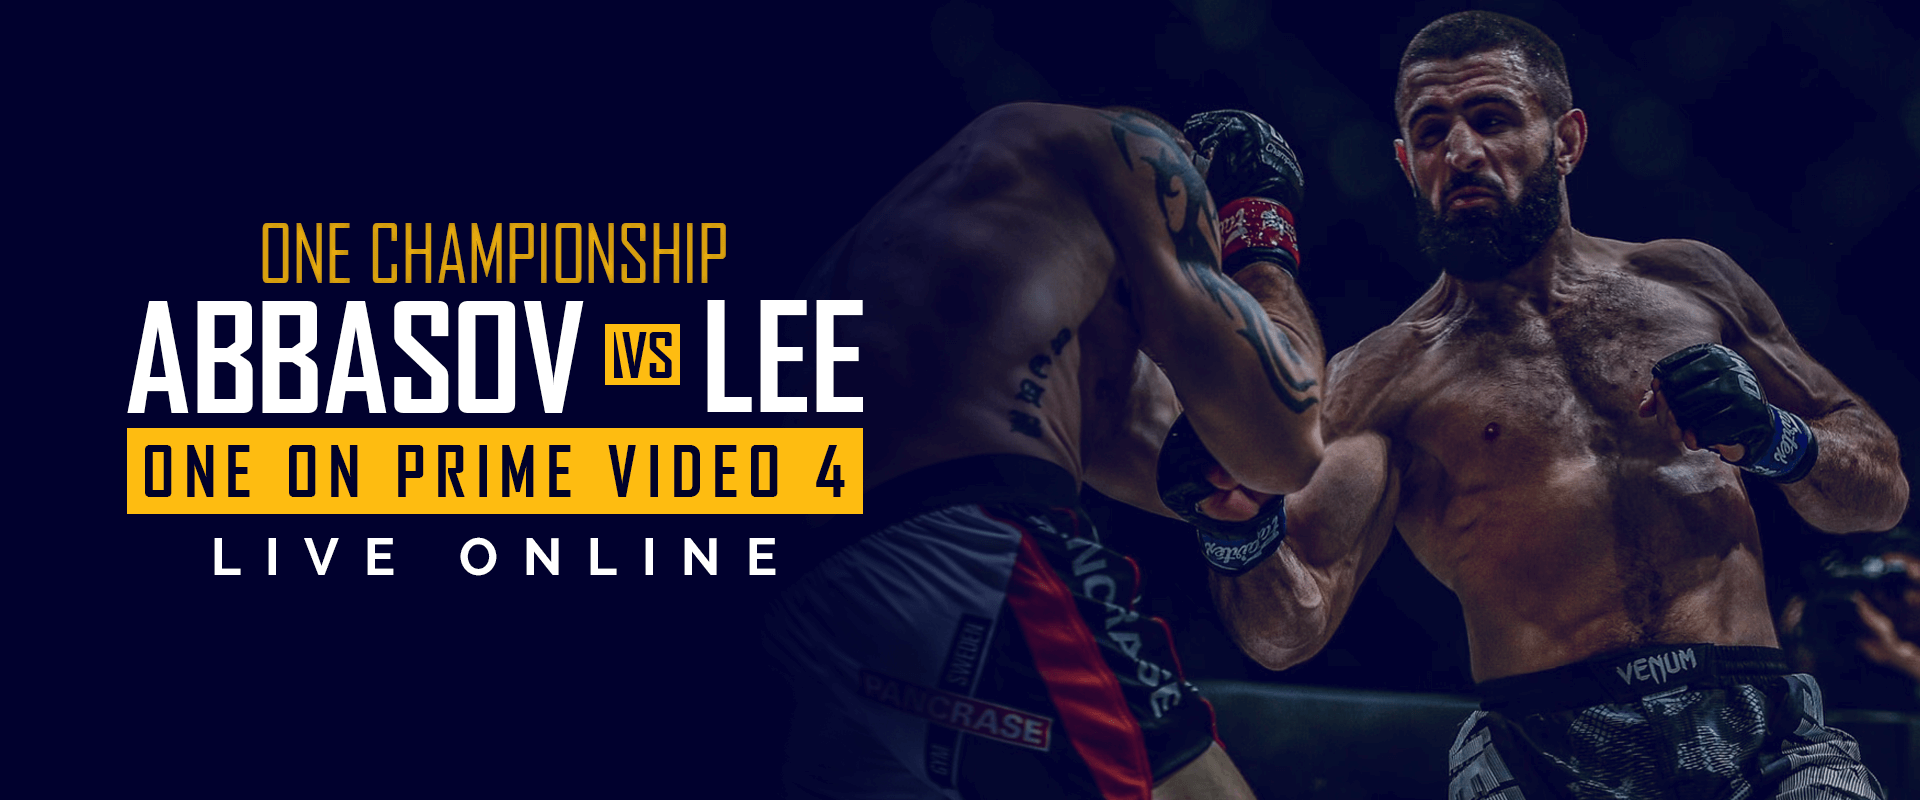 Mira One Championship en vivo en línea - ONE ON PRIME VIDEO 4 - ABBASOV vs LEE